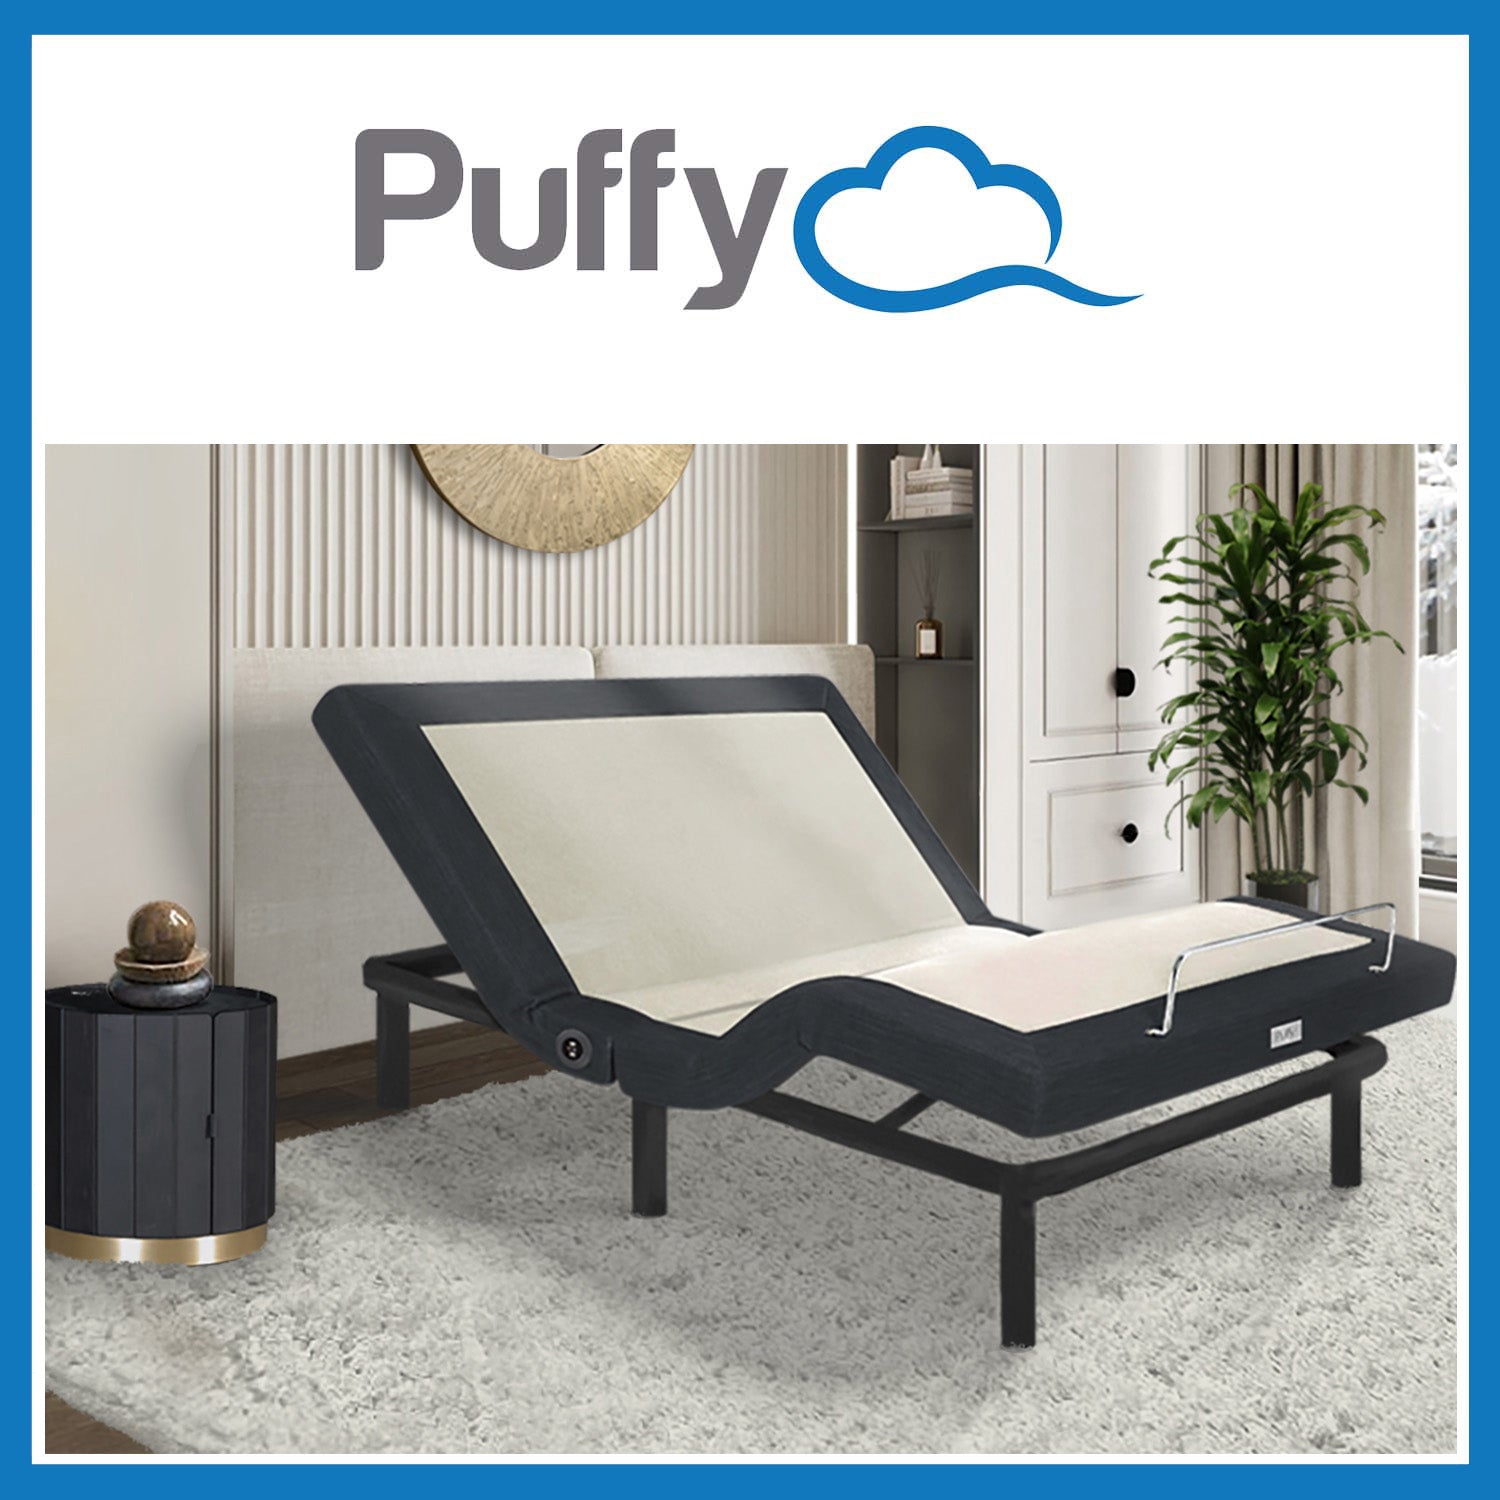 Puffy Serenity Adjustable Base